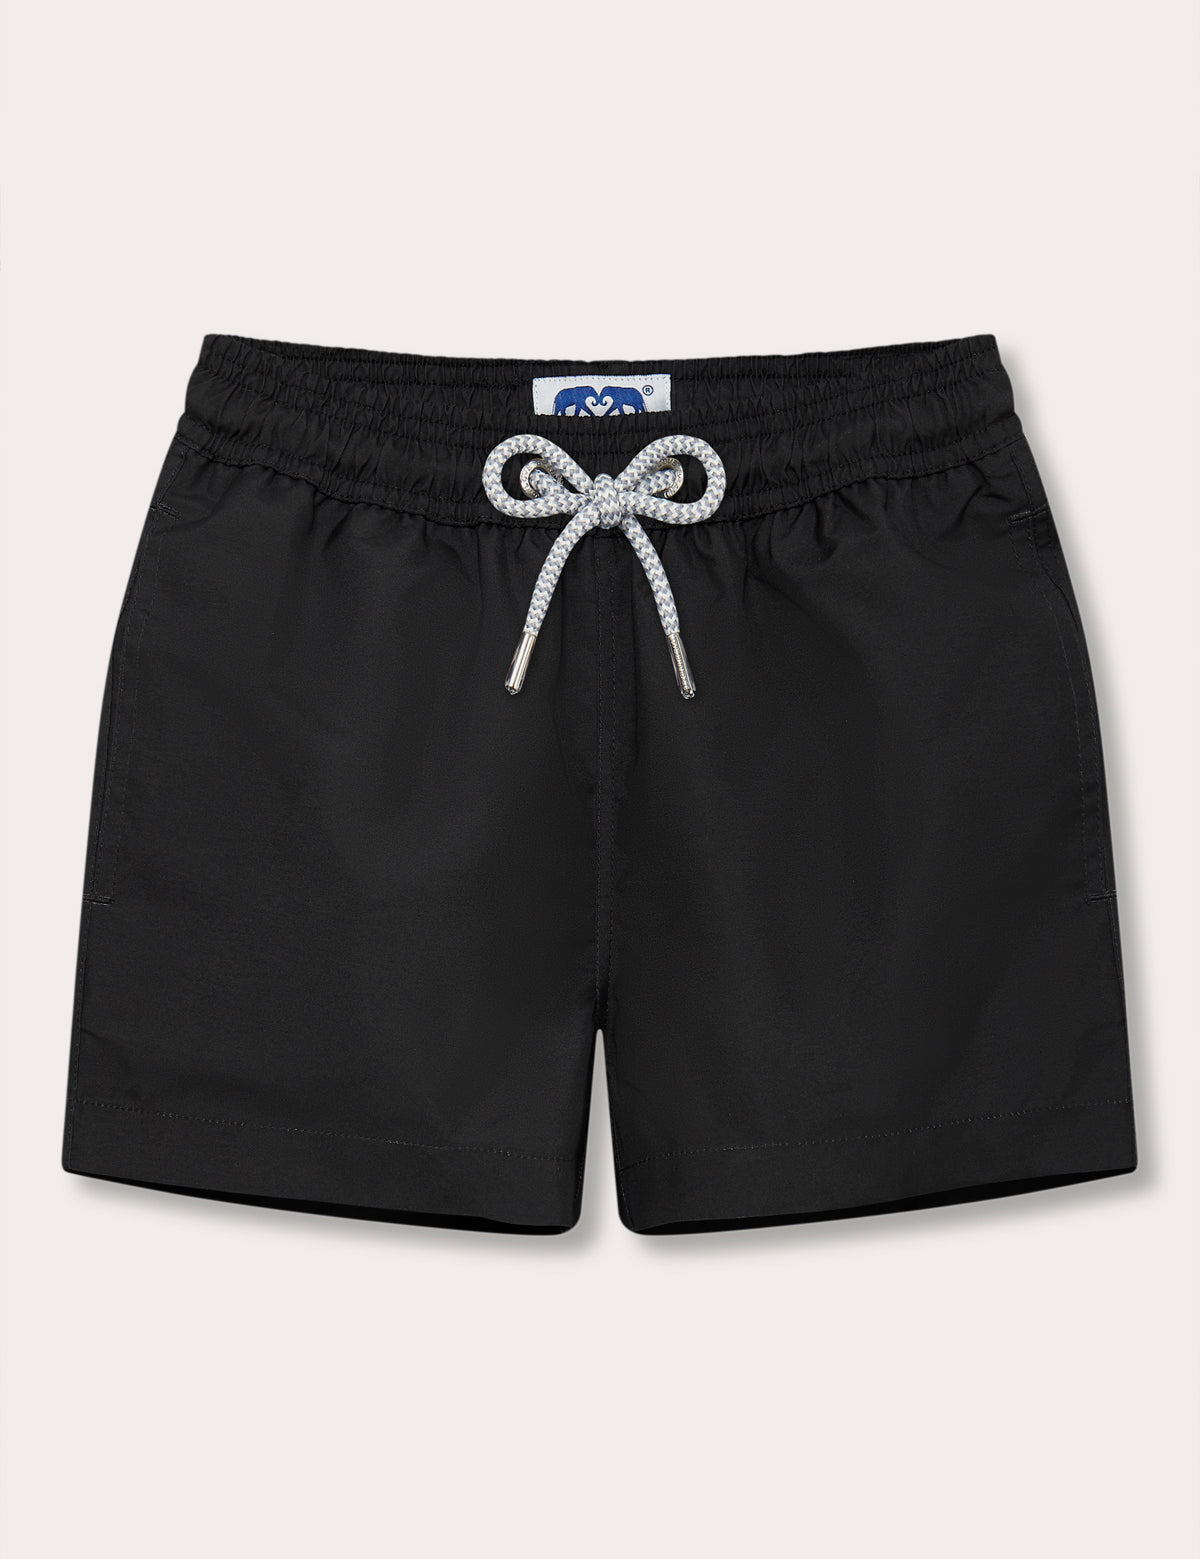 Boys Volcanic Black Staniel Swim Shorts with drawstring waistband.